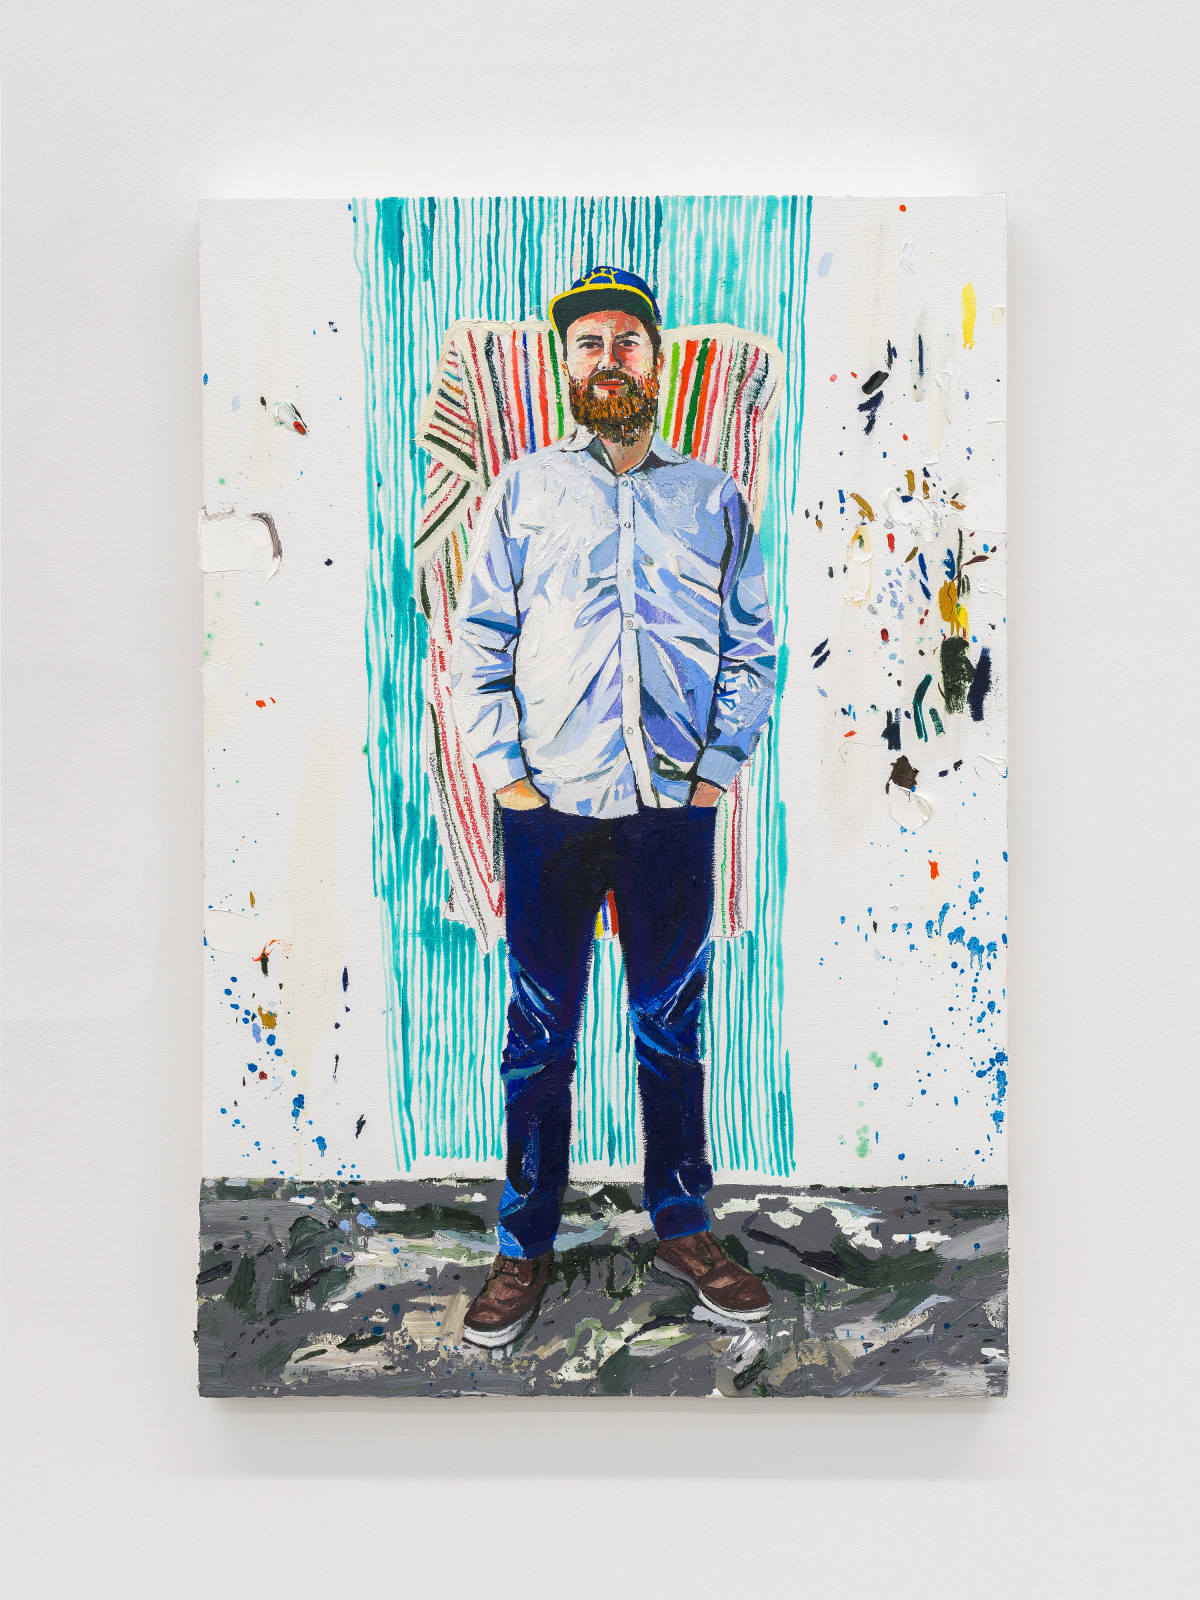 Raffi Kalenderian, ‘Joe’, 2018, Graphite on canvas